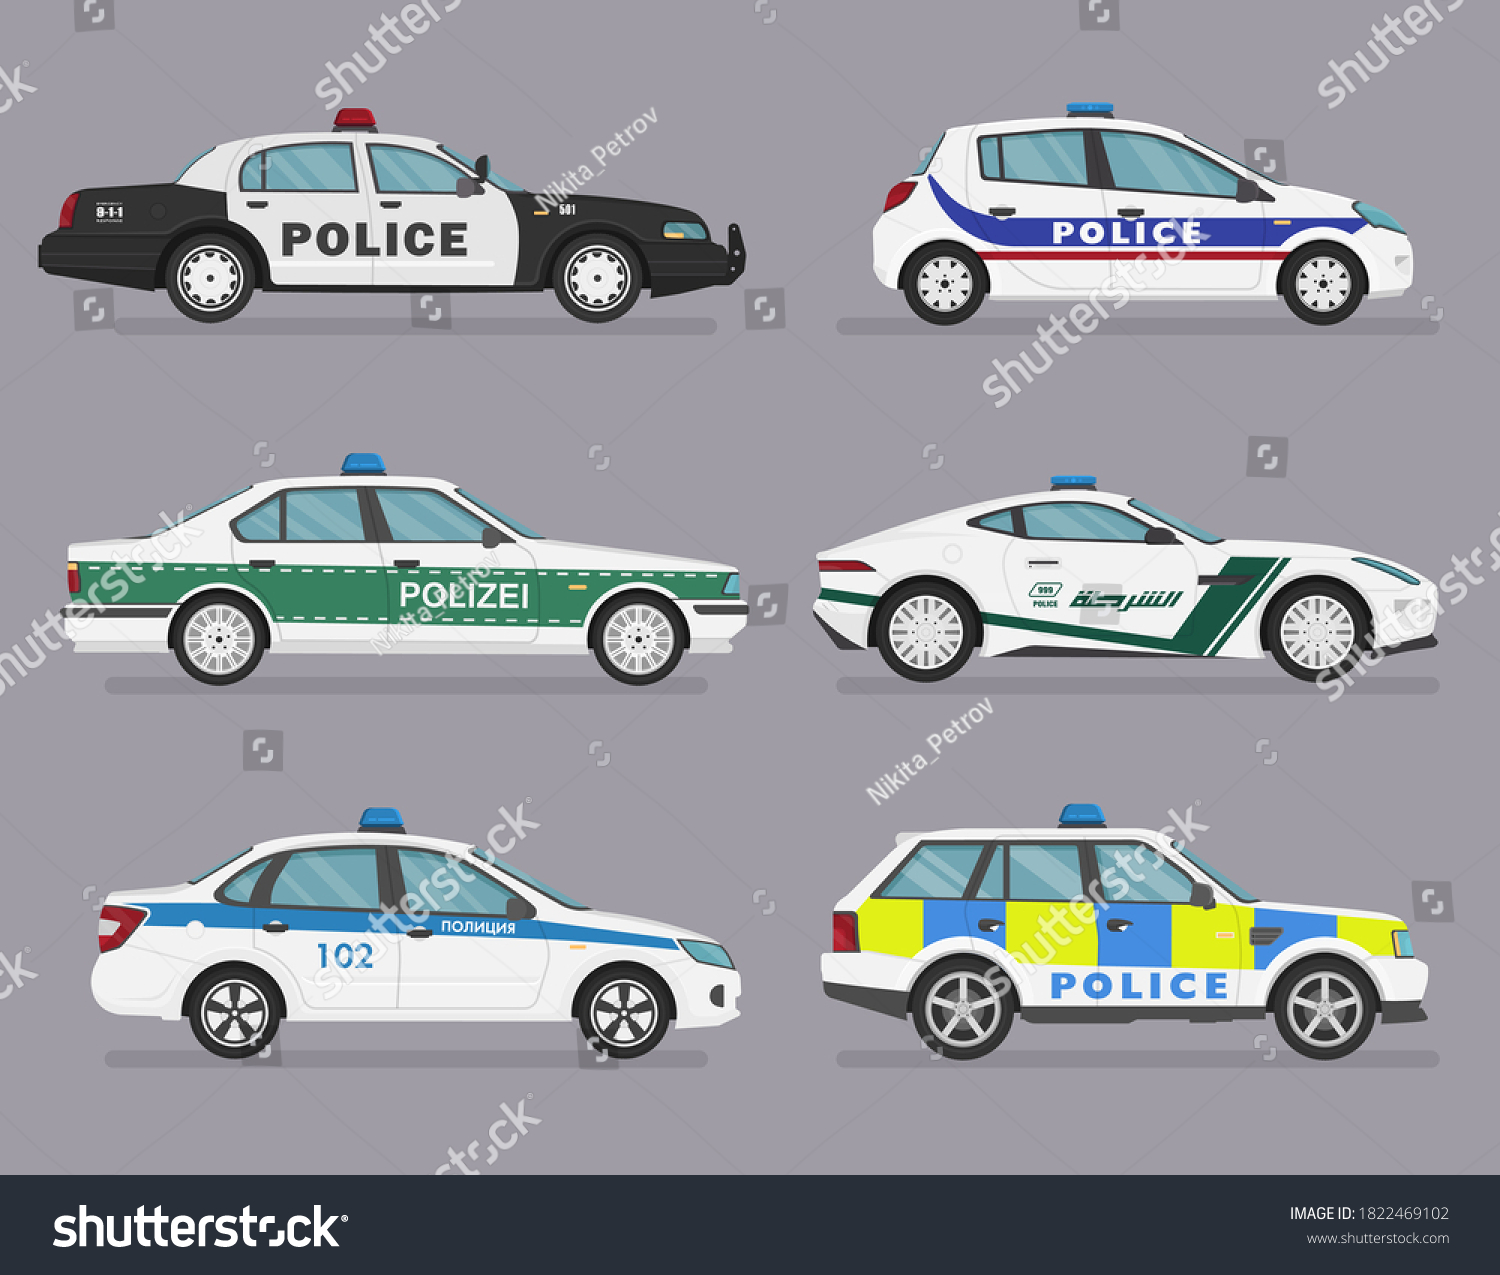 SVG of Translation: police. Set of isolated police cars. 4x4, sedan, hatchback, sport car. Flat illustration, icon for graphic and web design. Side view on grey background. svg